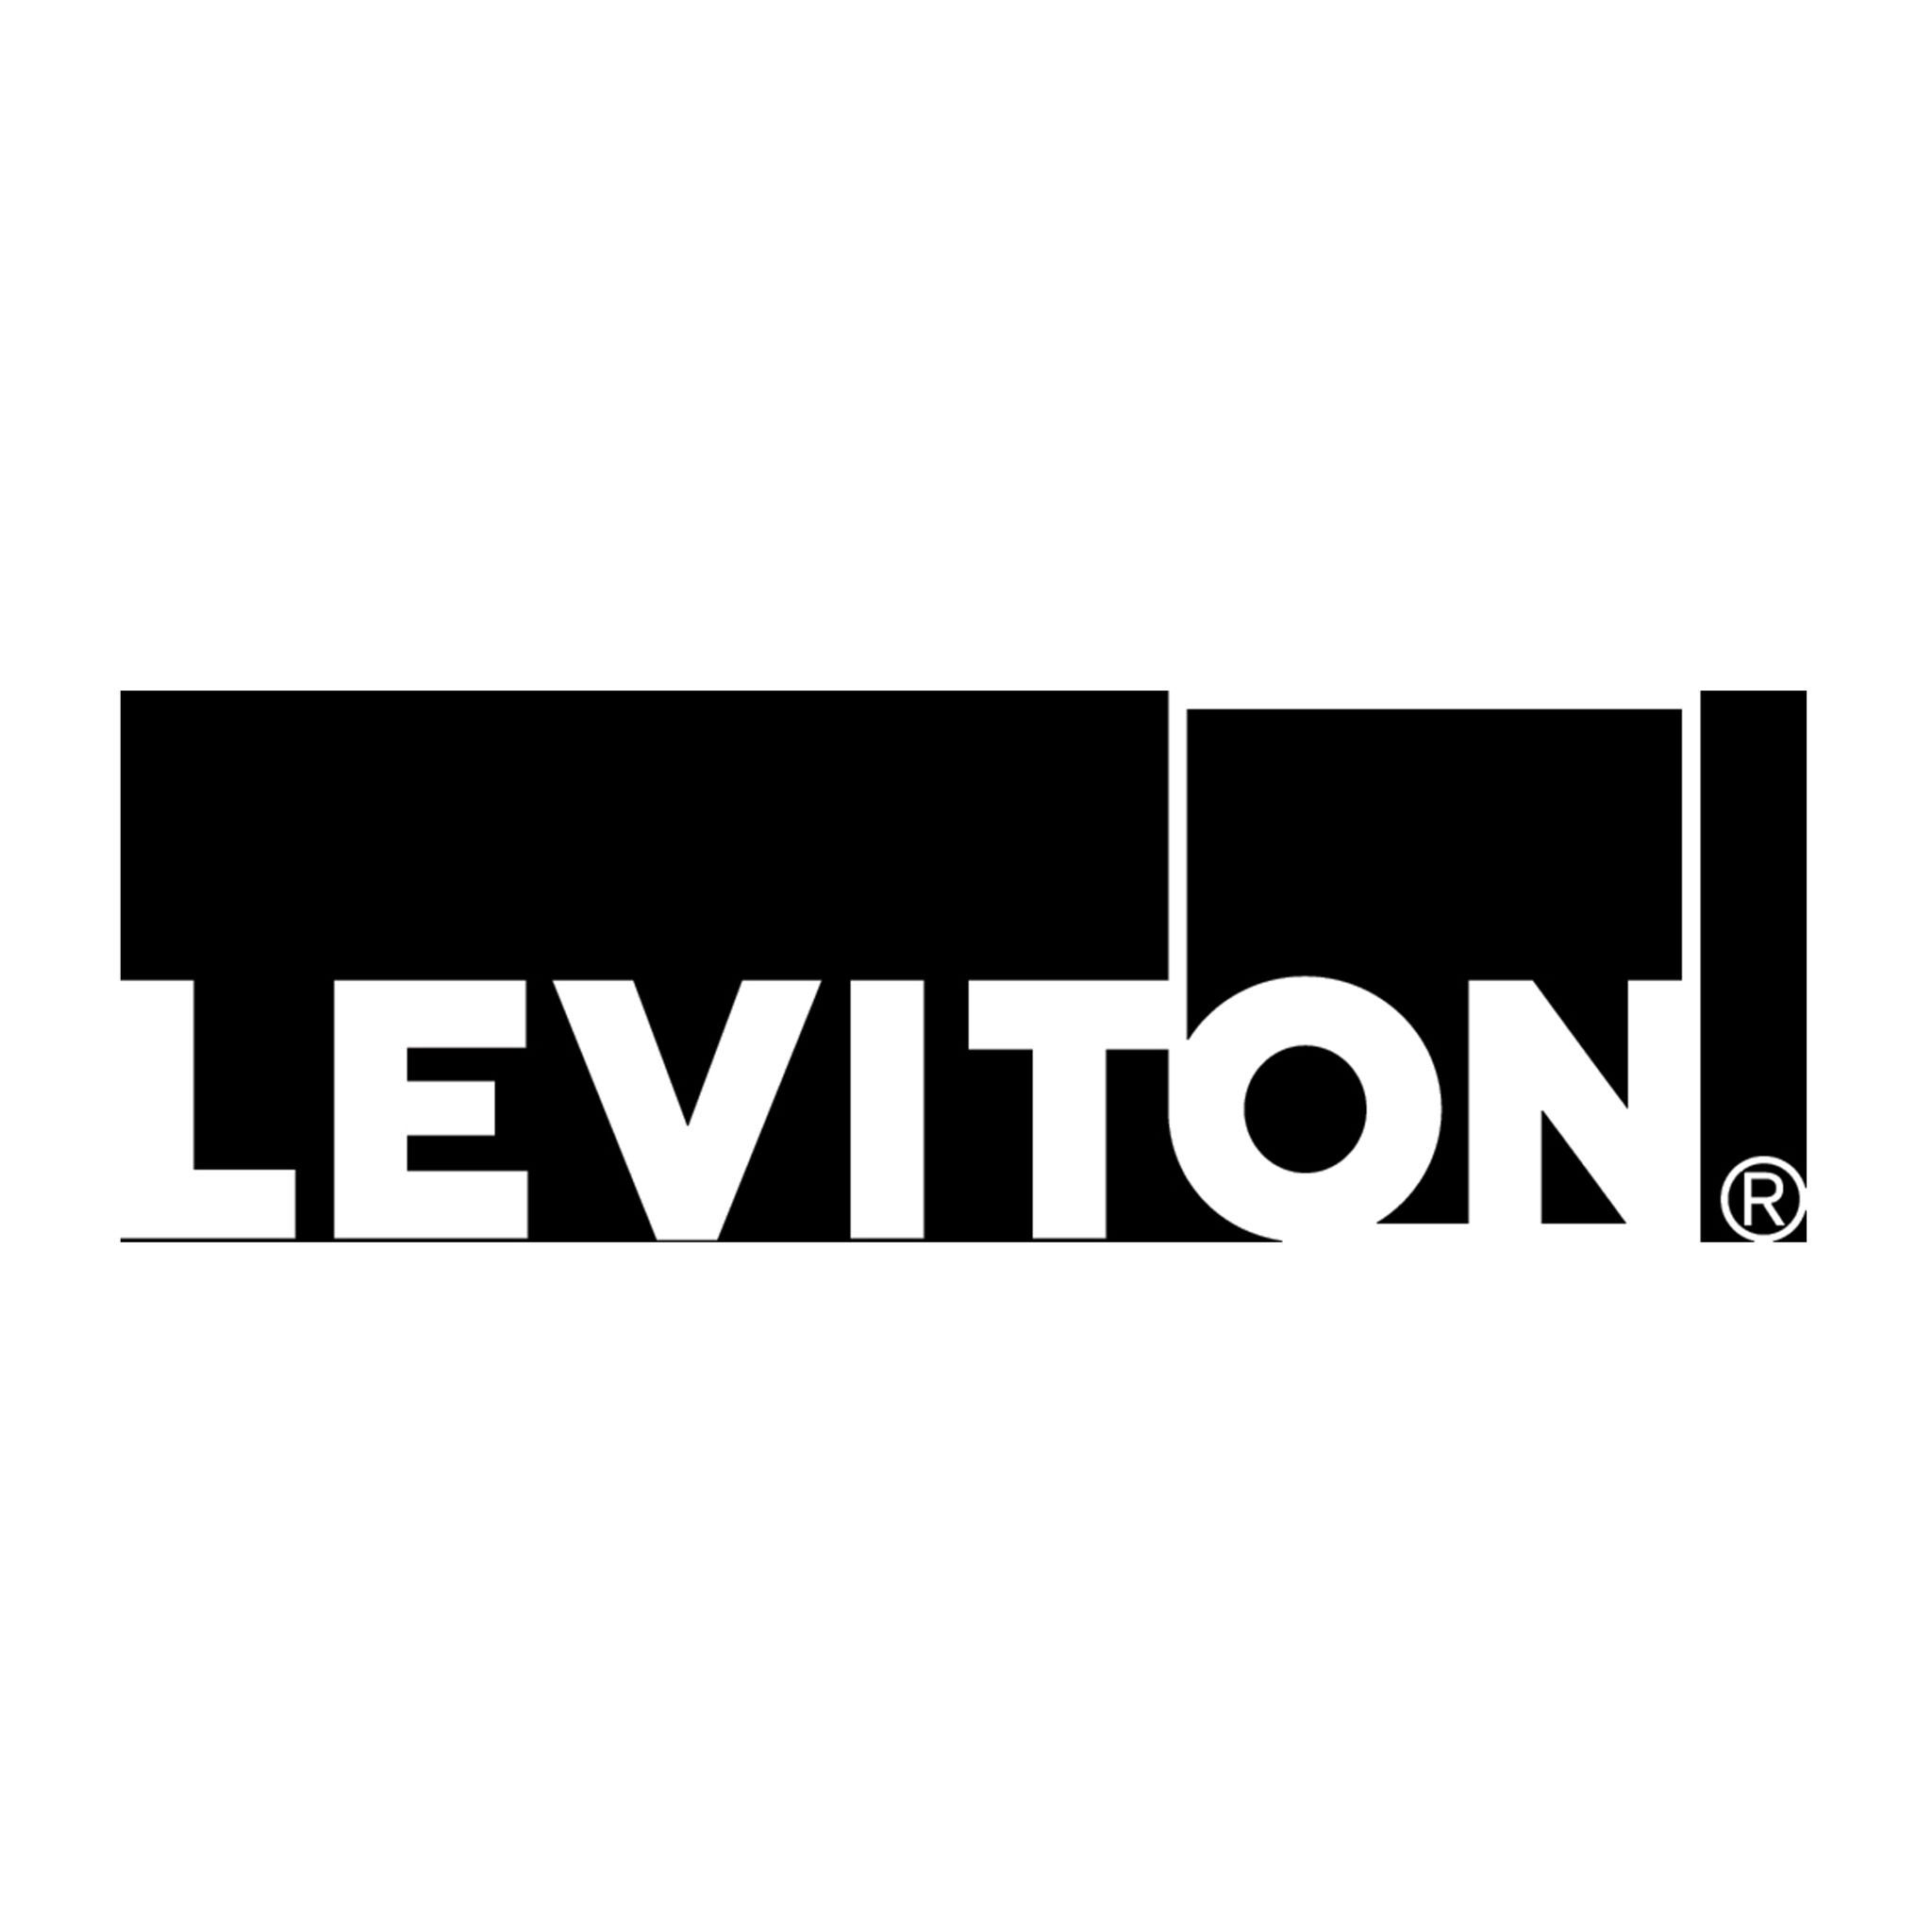 Leviton Stroke Logo